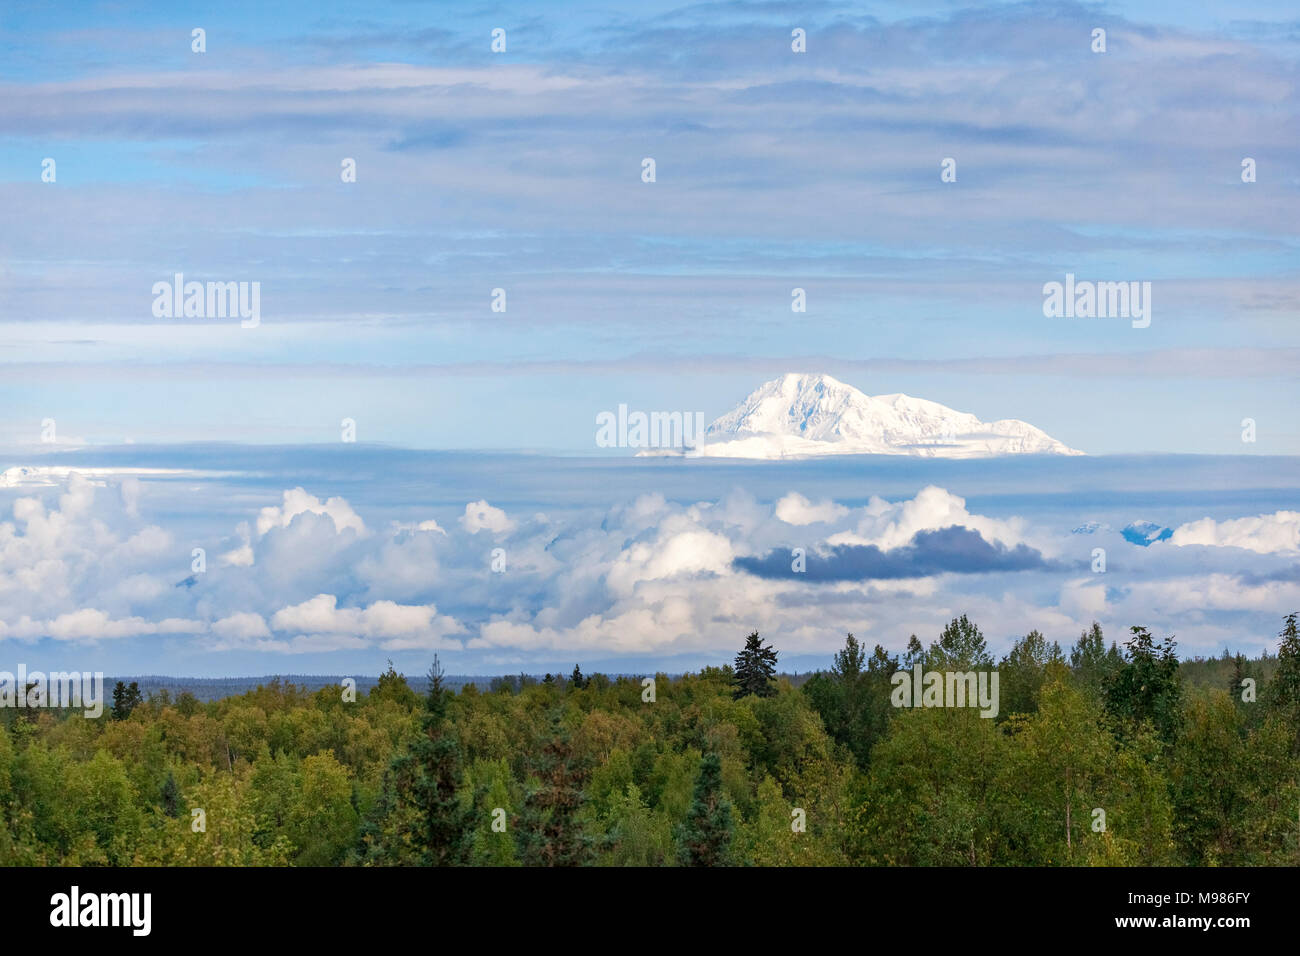 Stati Uniti d'America, Alaska, Talkeetna, in vista della cima del monte Denali Foto Stock